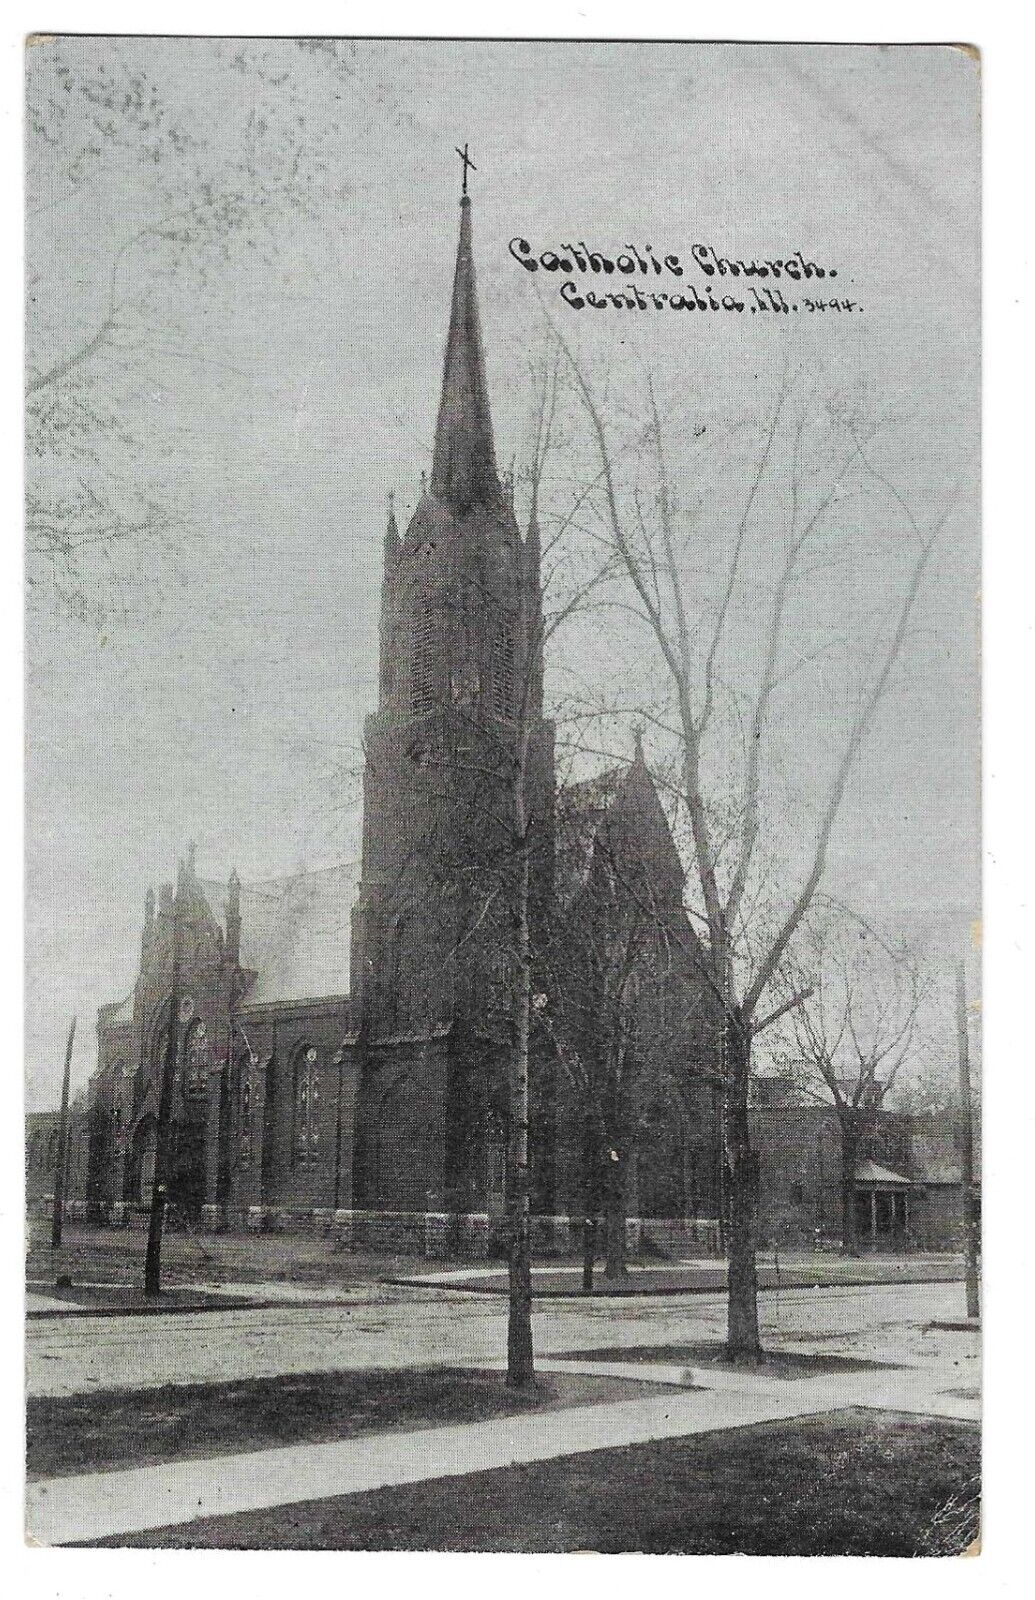 Centralia, IL Illinois 1910 Postcard, Catholic Church by C.U. Williams